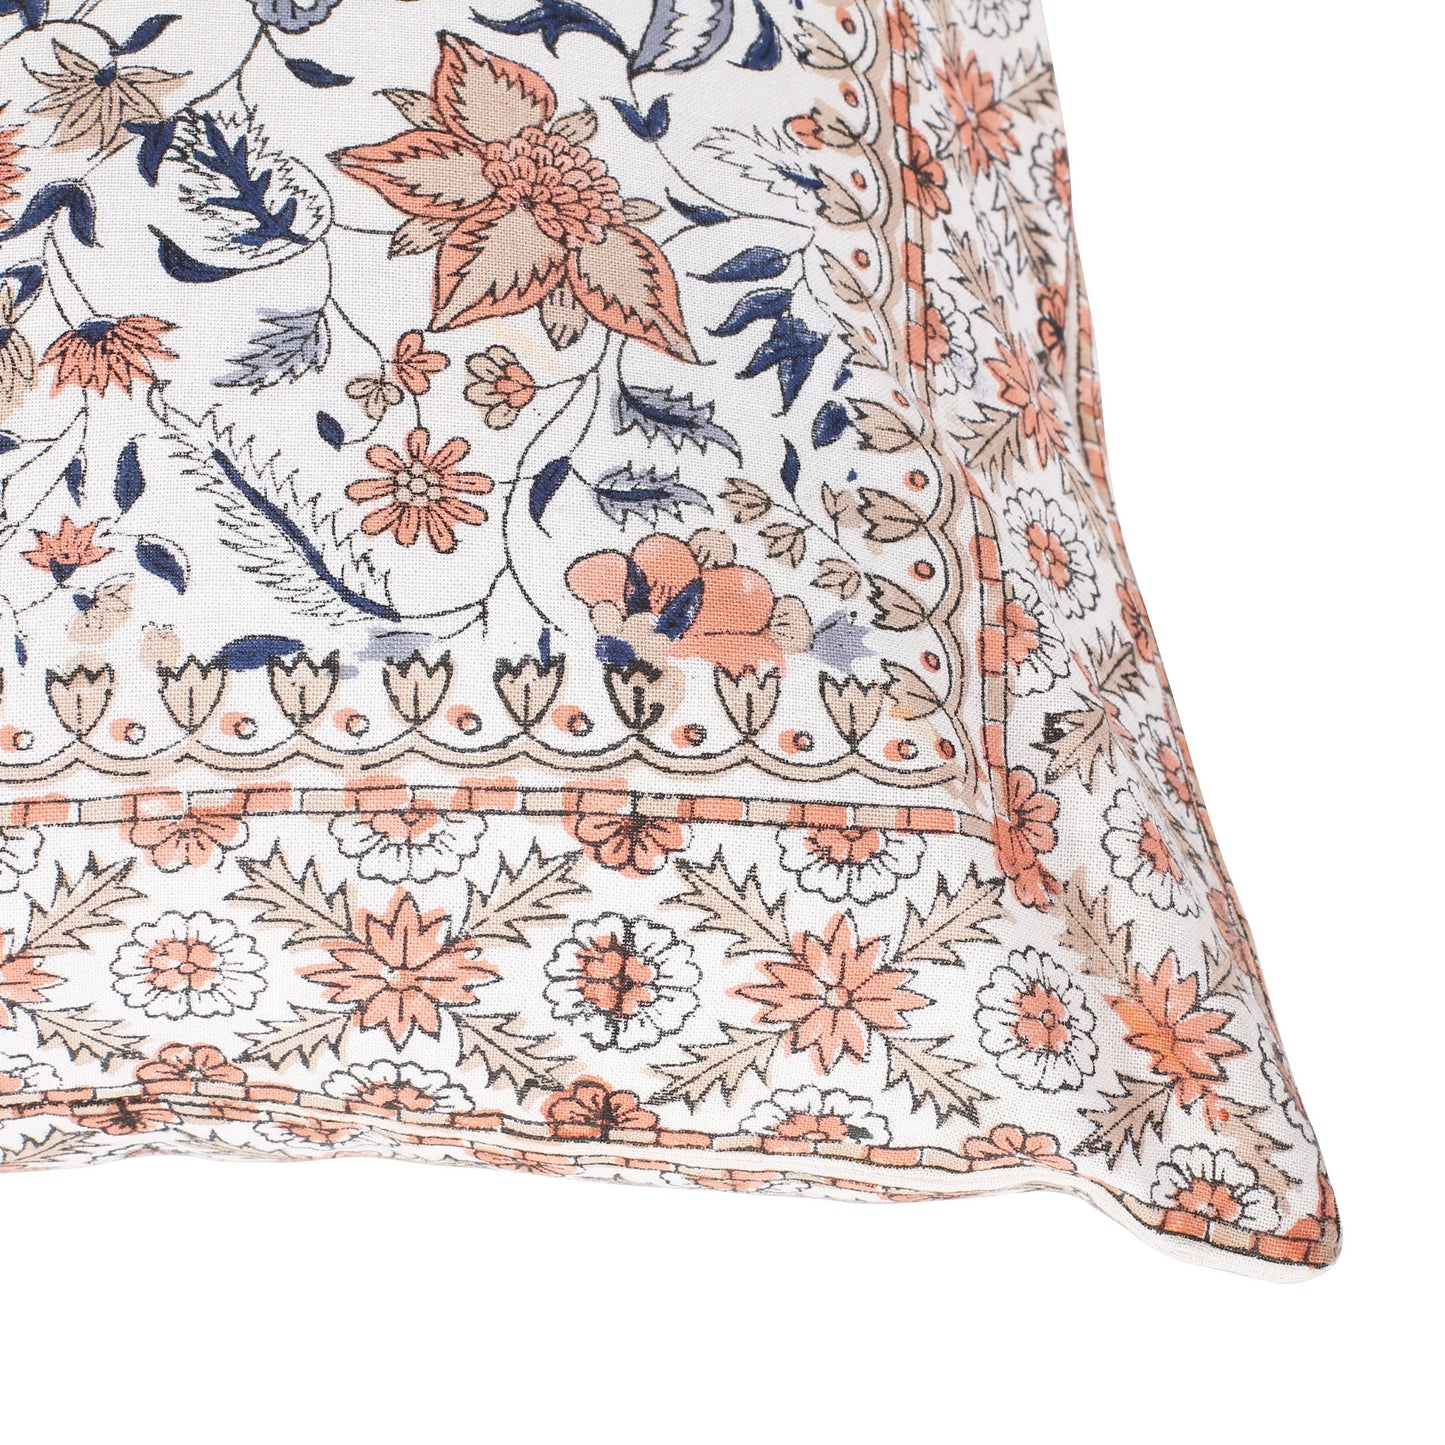 Aalasia Modern Fabric Throw Pillow Cover (Set of 2)